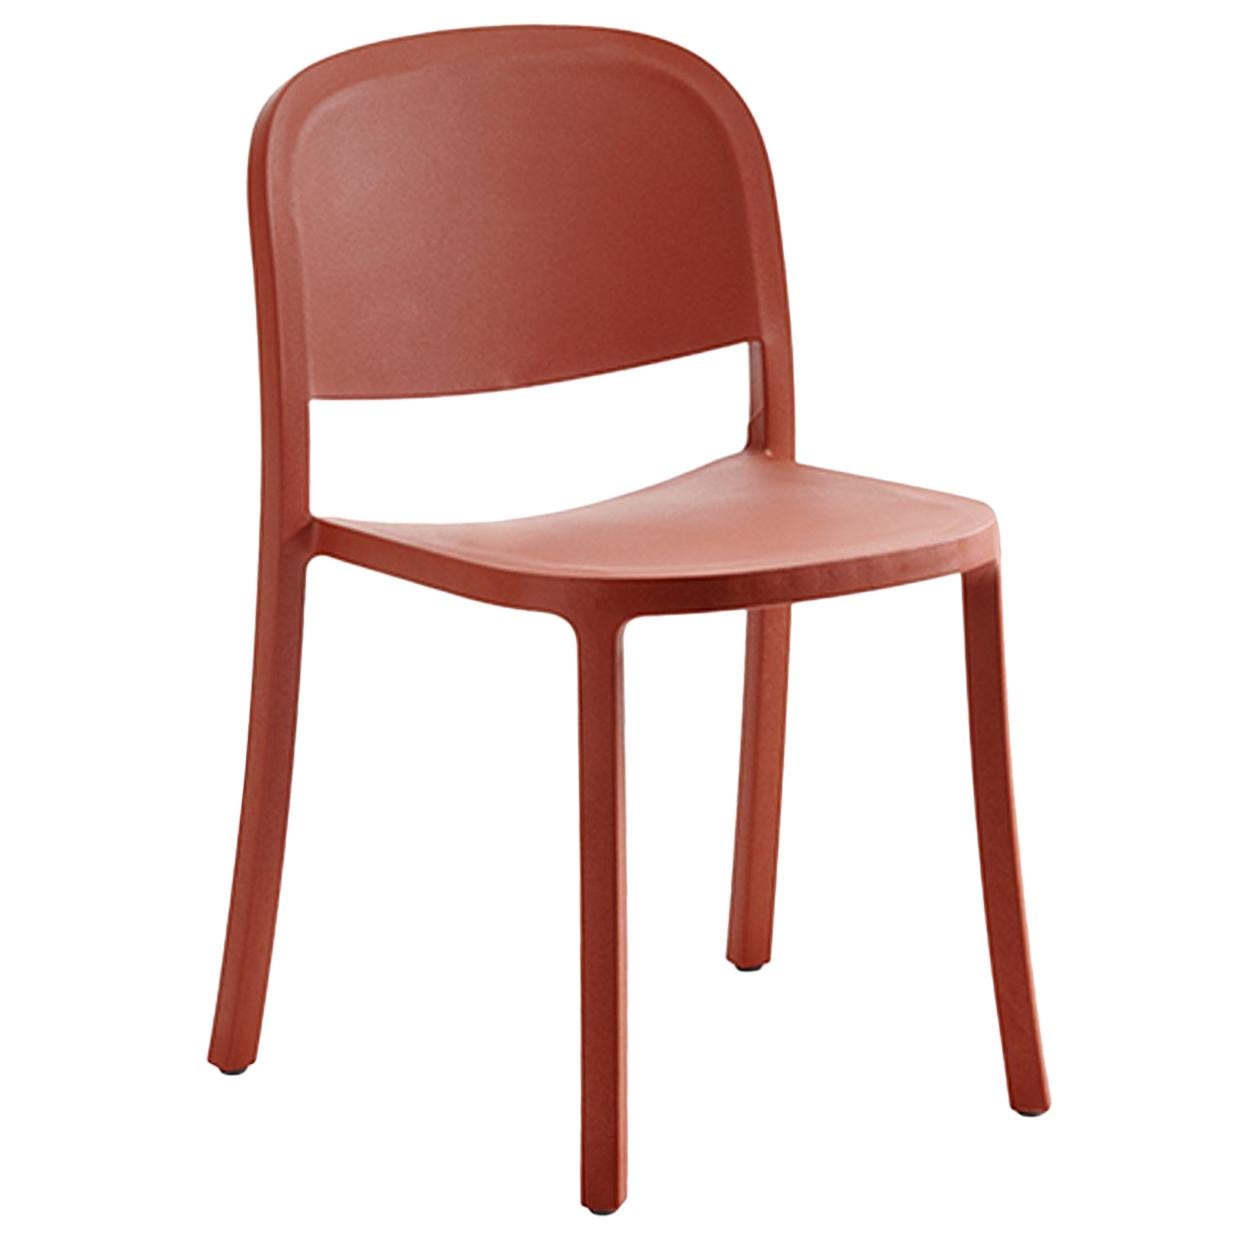 Emeco 1 Inch Reclaimed Chair in Orange by Jasper Morrison For Sale